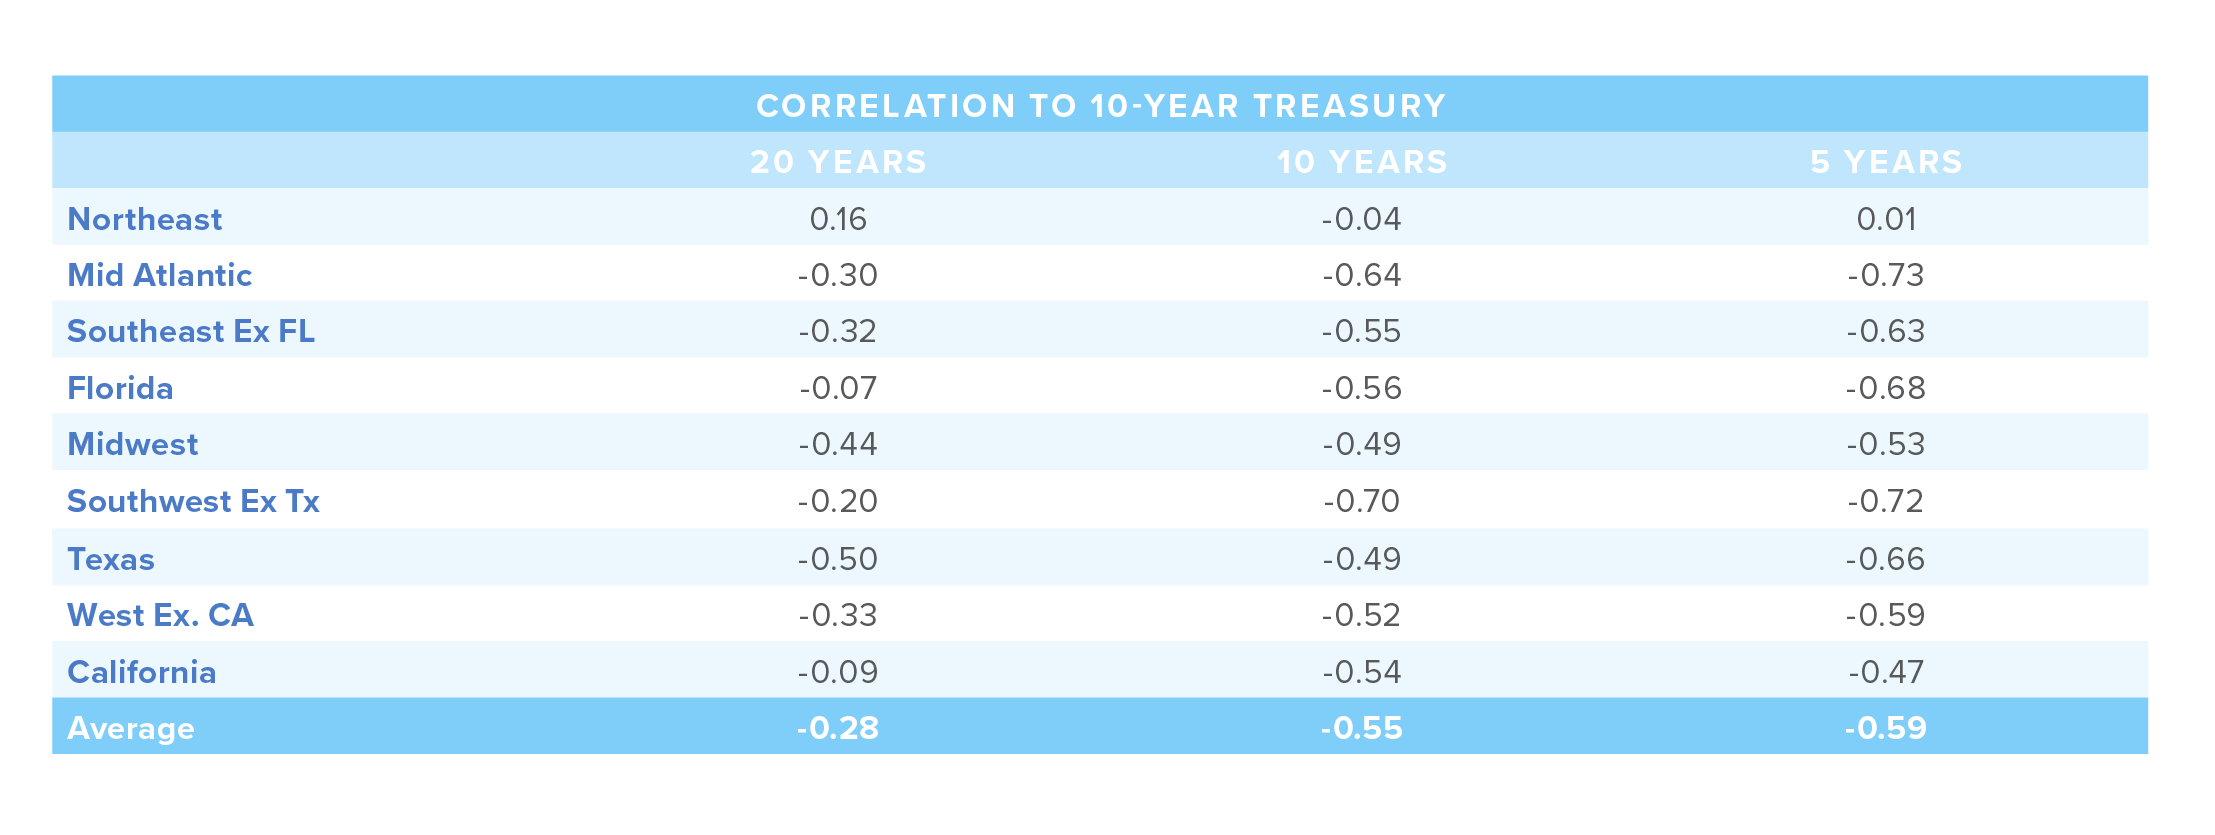 Correlation to 10-Year Treasury